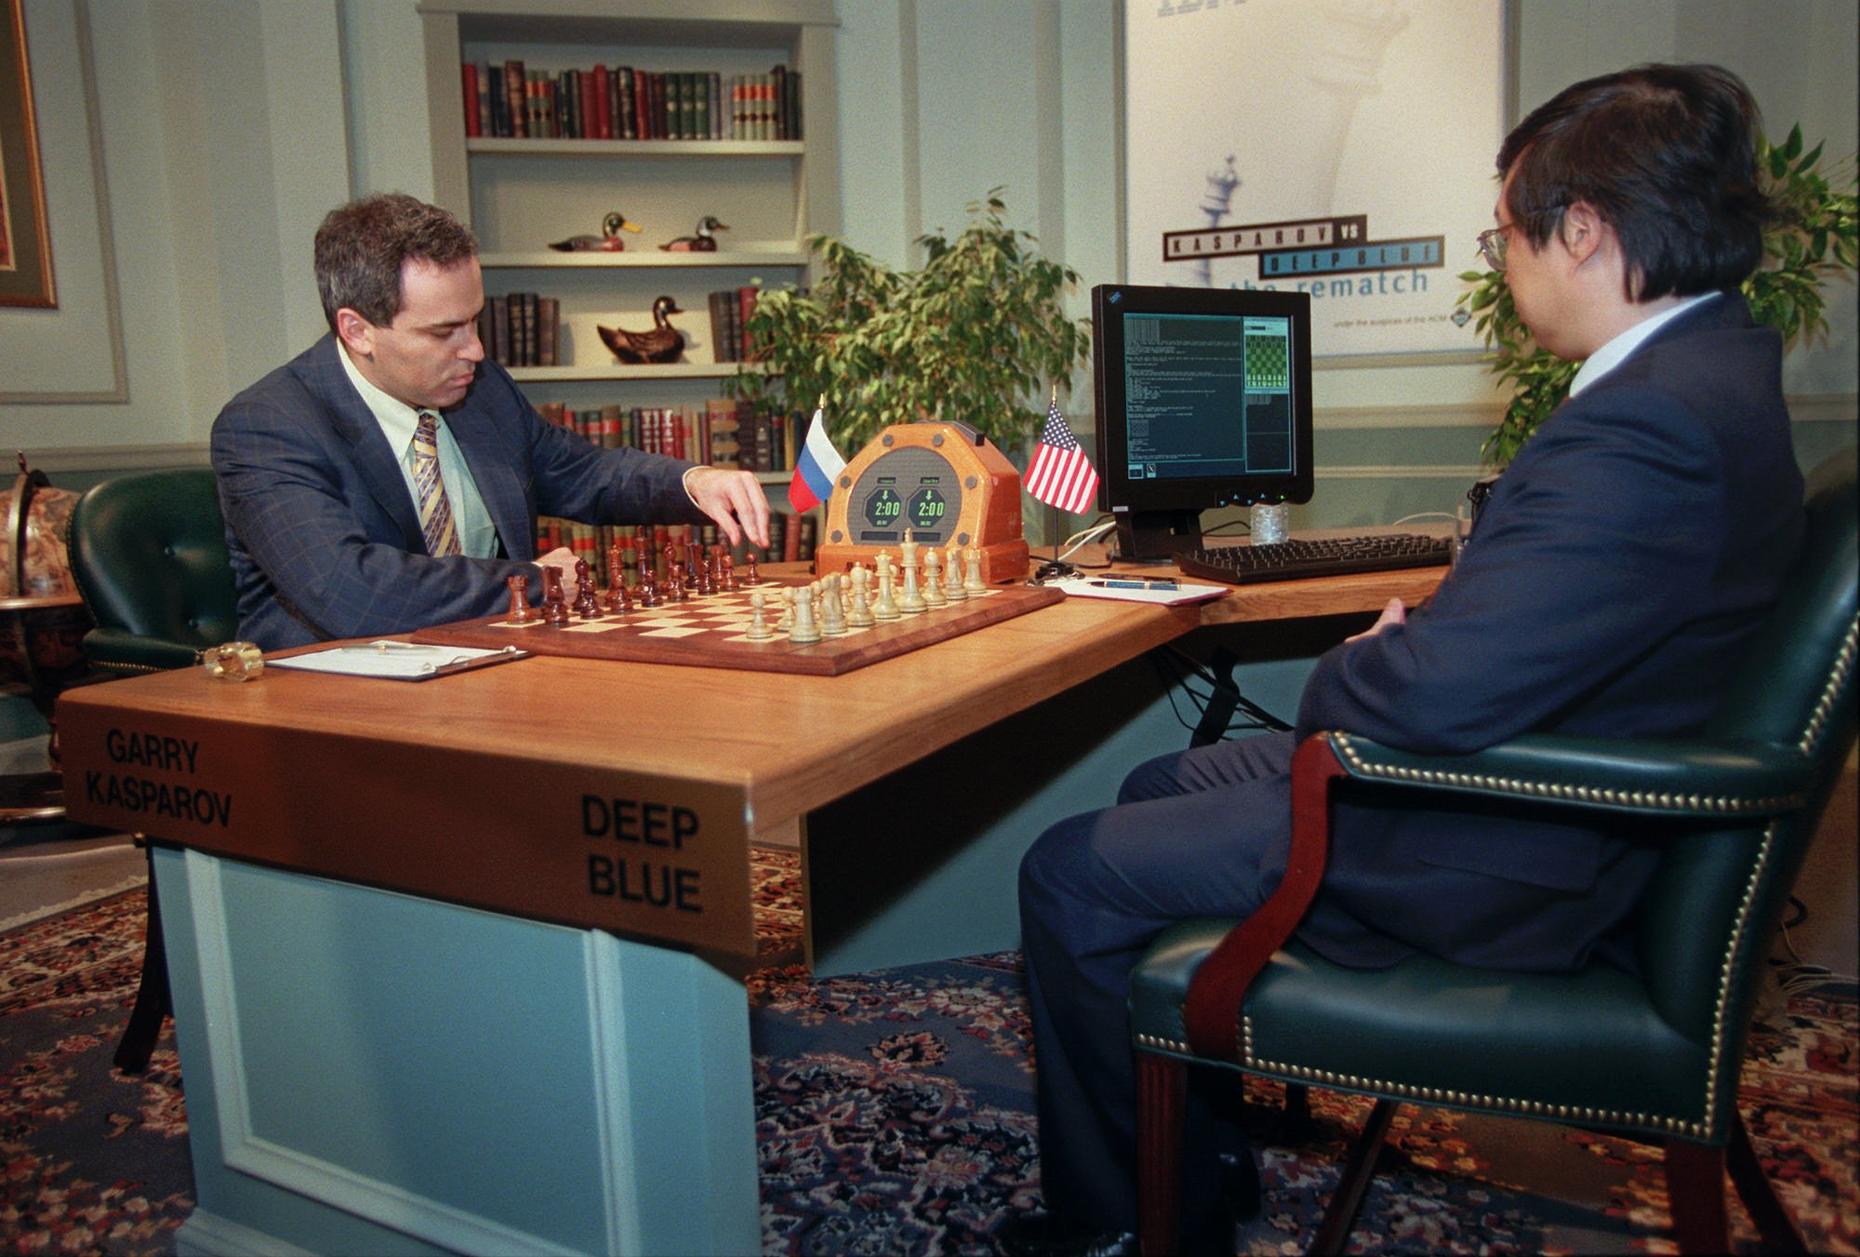 Deep blue ai vs Gary Kasparov #chess #chesstok #NextLevelDish #chessma